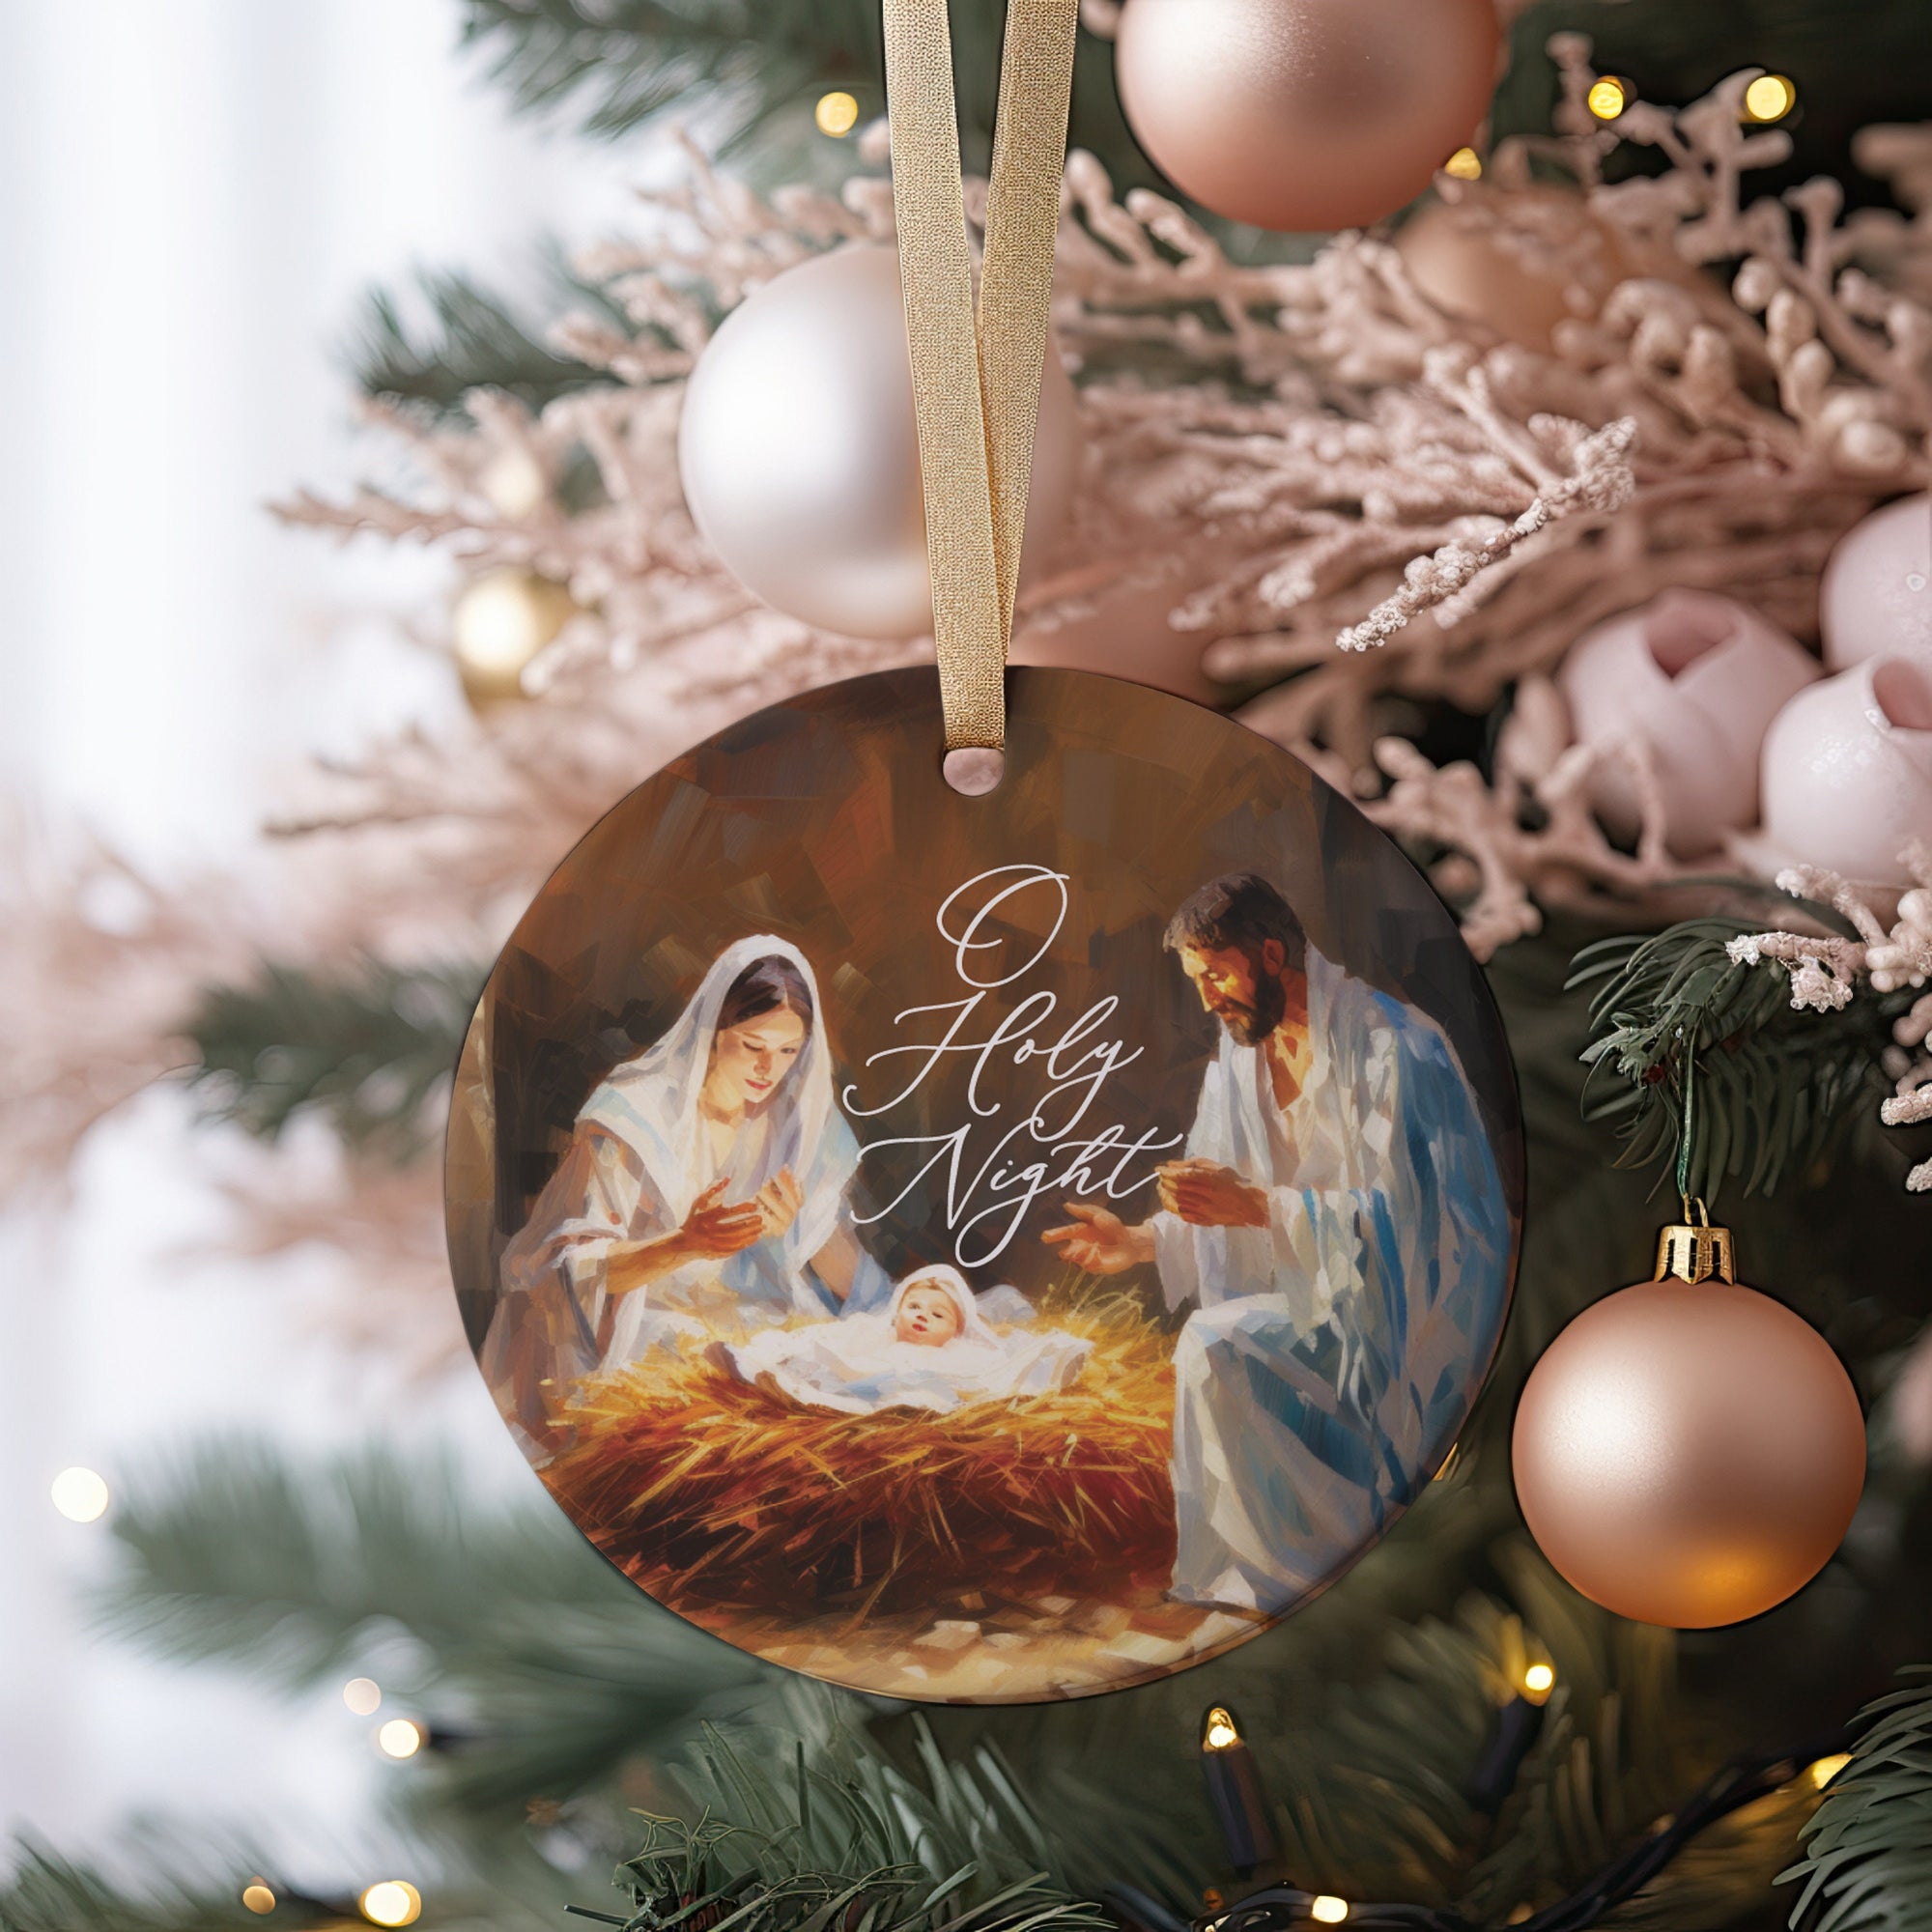 Nativity Story Baby Jesus O Holy Night Christian Bible Study Group Friendship Ceramic Christmas Ornament Gift Idea, with Ribbon + Gift Box